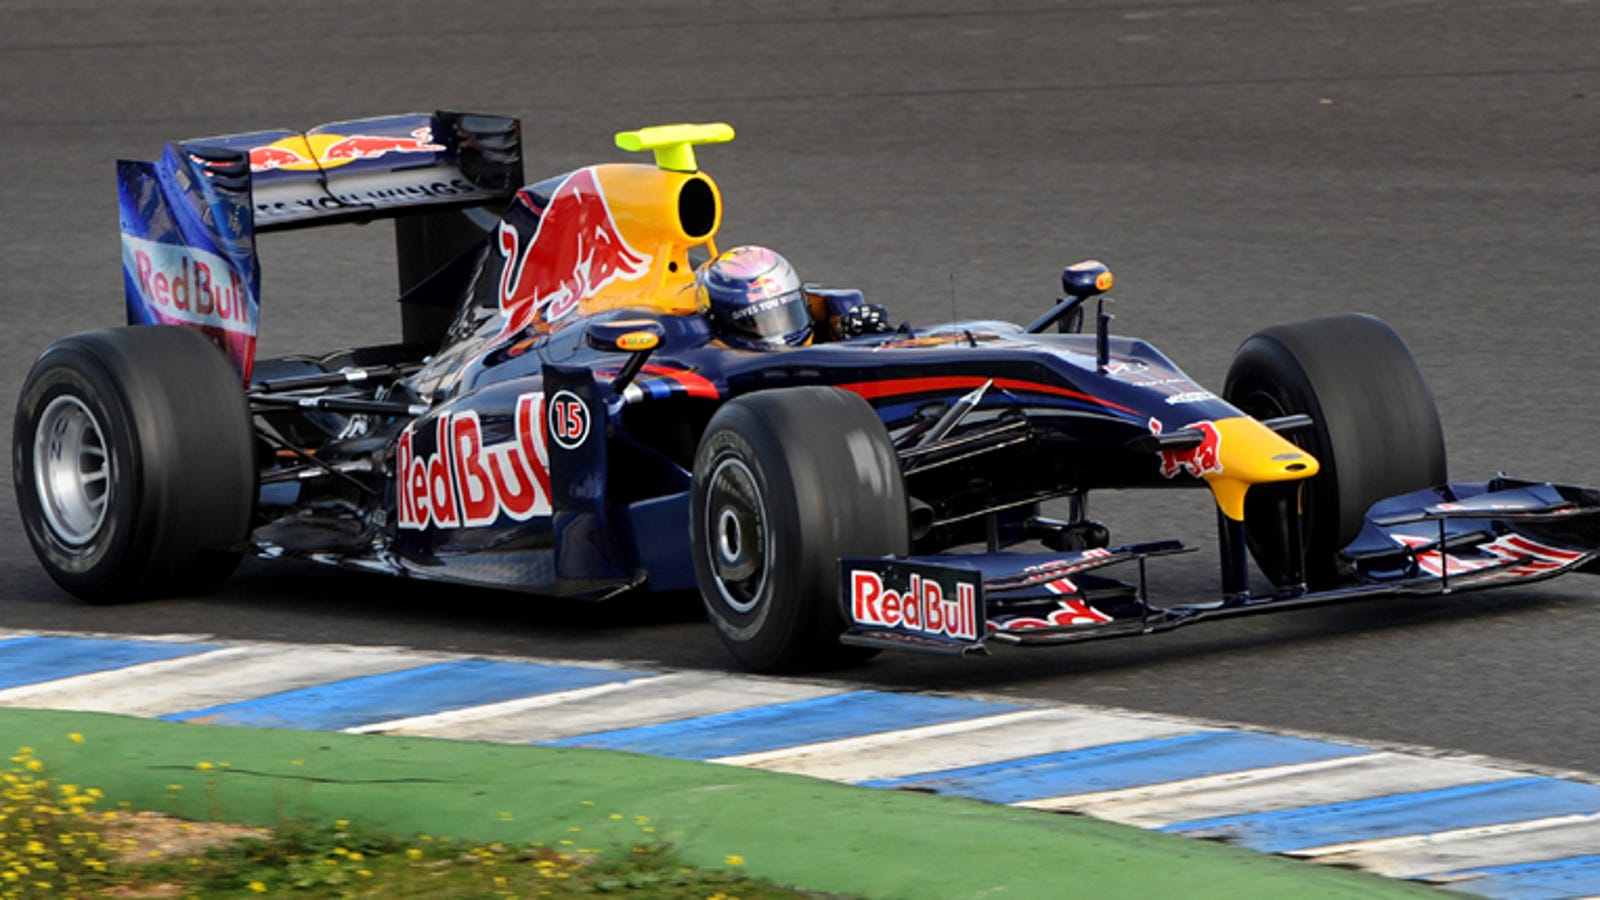 Red Bull Racing 2009 RB5 F1 Car Debuts At Circuito De Jerez, Gets Wings